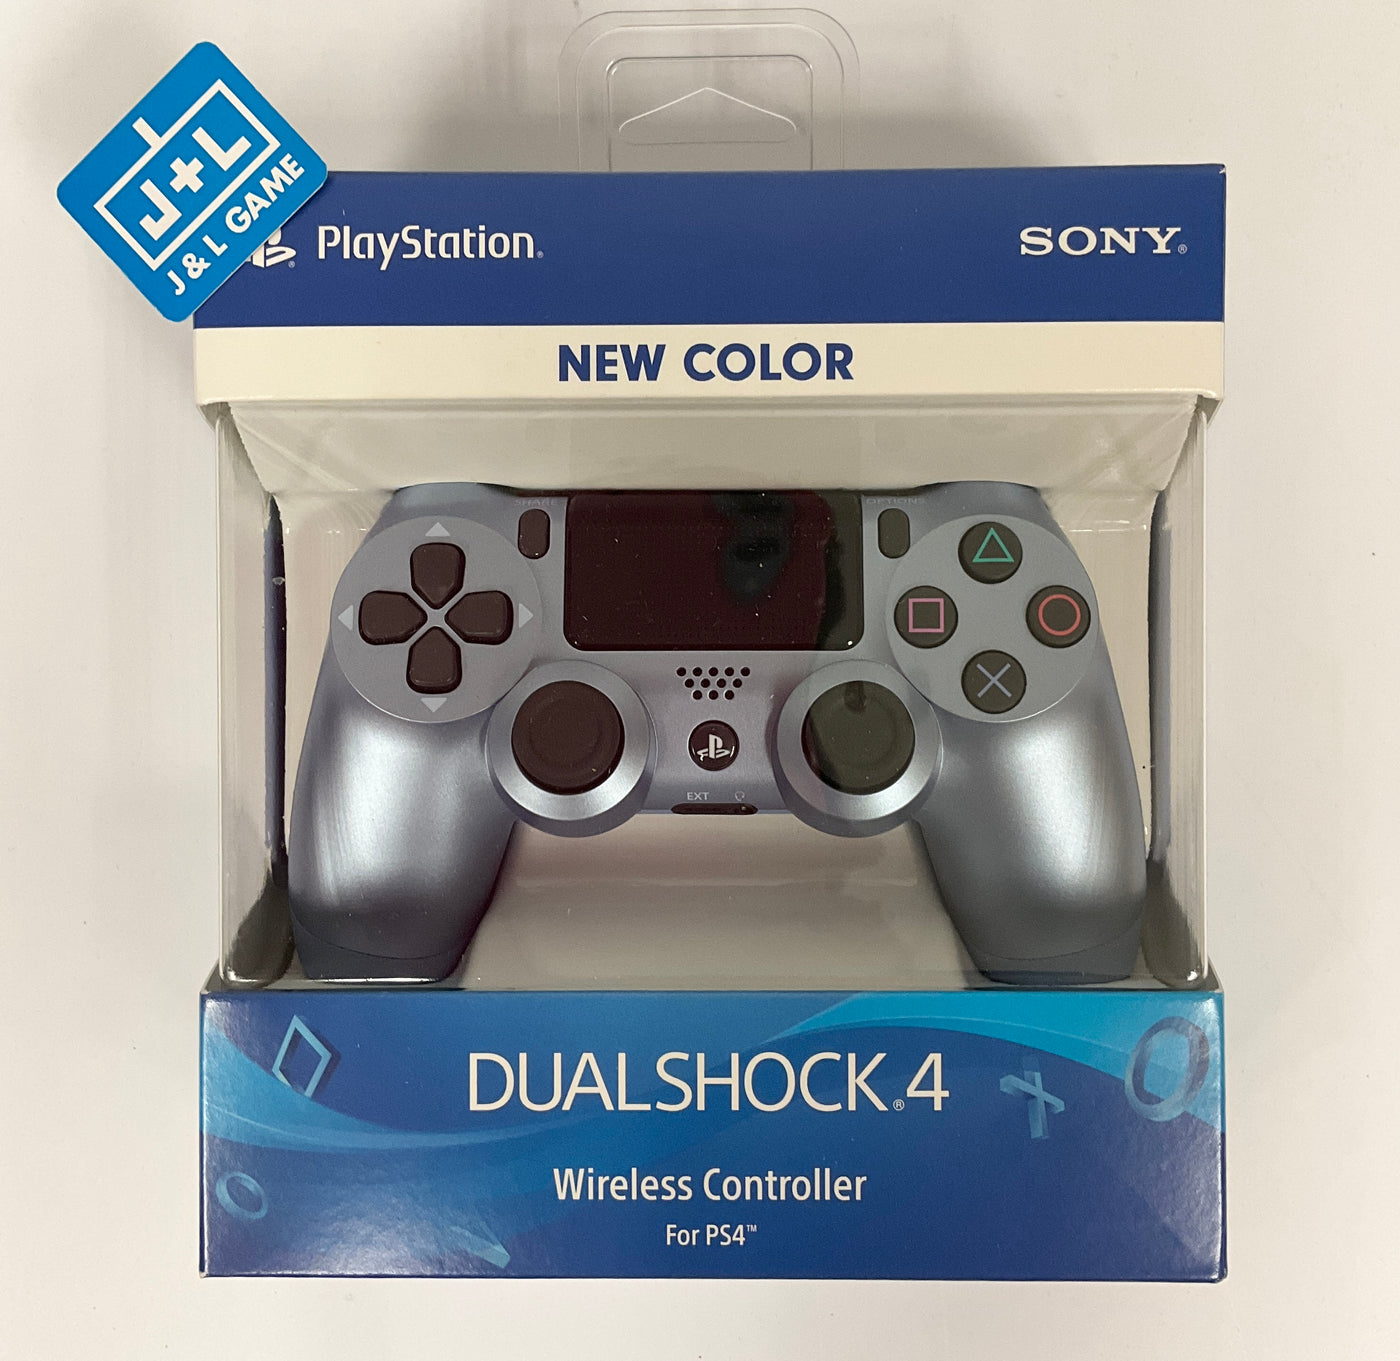 Sony DualShock Game | (PS4) Blue) 4 Wireless PlayStati - Controller J&L (Titanium